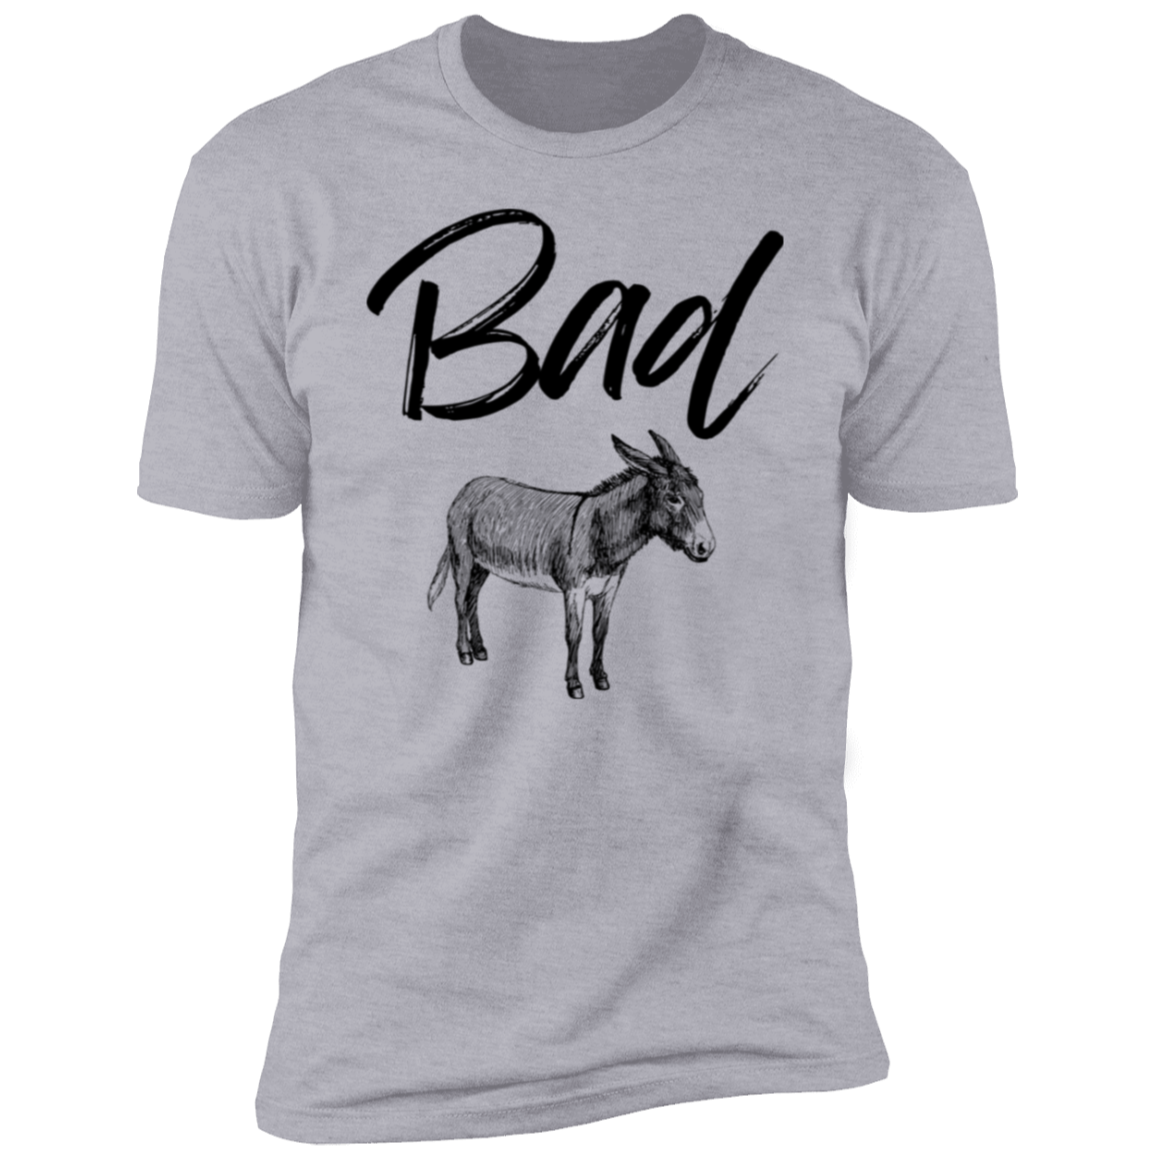 Bad A$$ T-Shirt, Funny Shirts